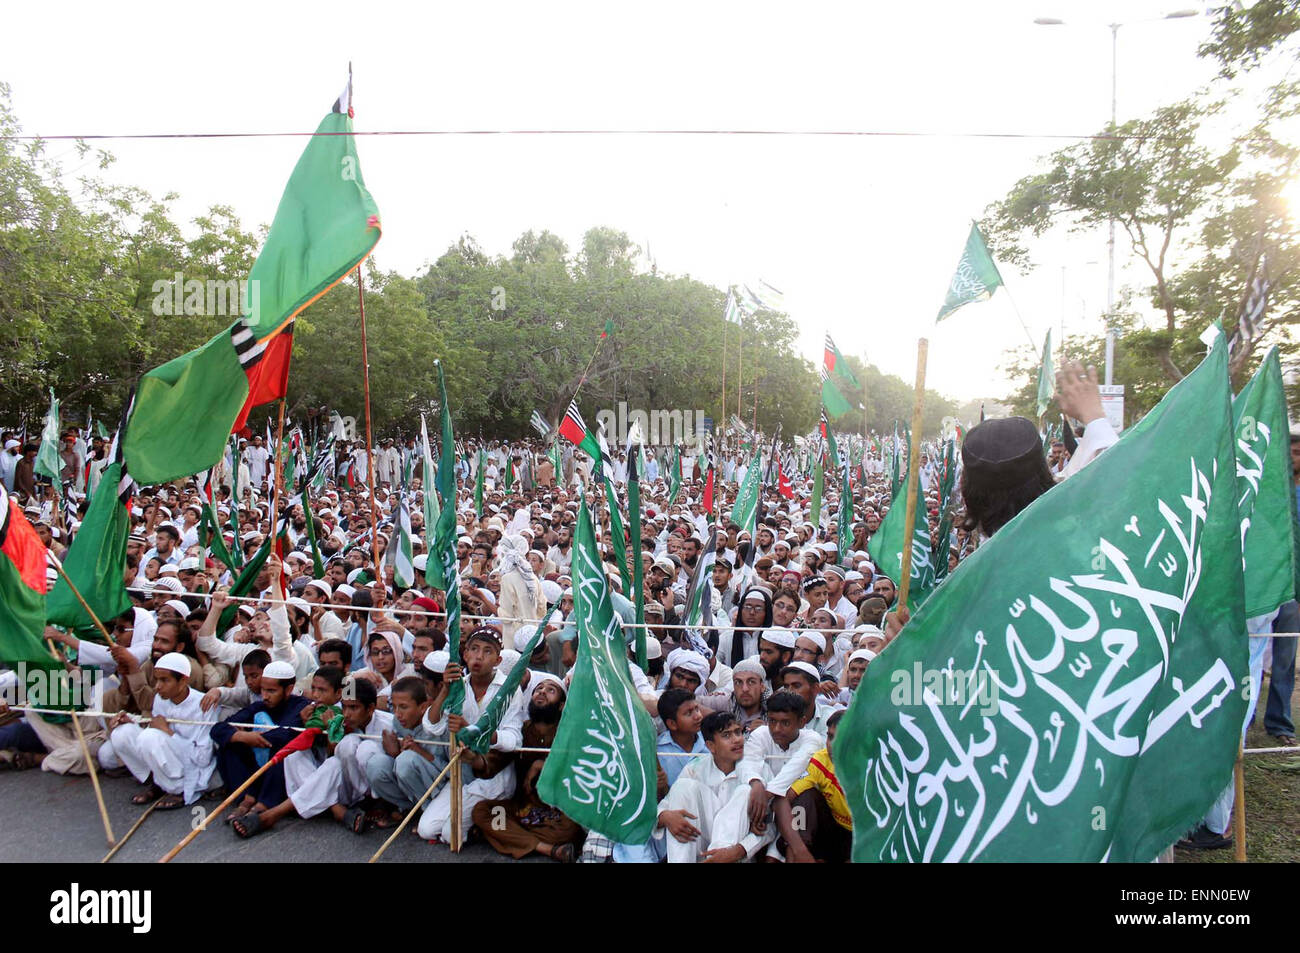 Supporters of Ahle Sunnat Wal Jamat gather during Tahaffuz Harmain Sharif Conference held at Mazar-e-Quaid in Karachi on Friday, May 08, 2015. Stock Photo